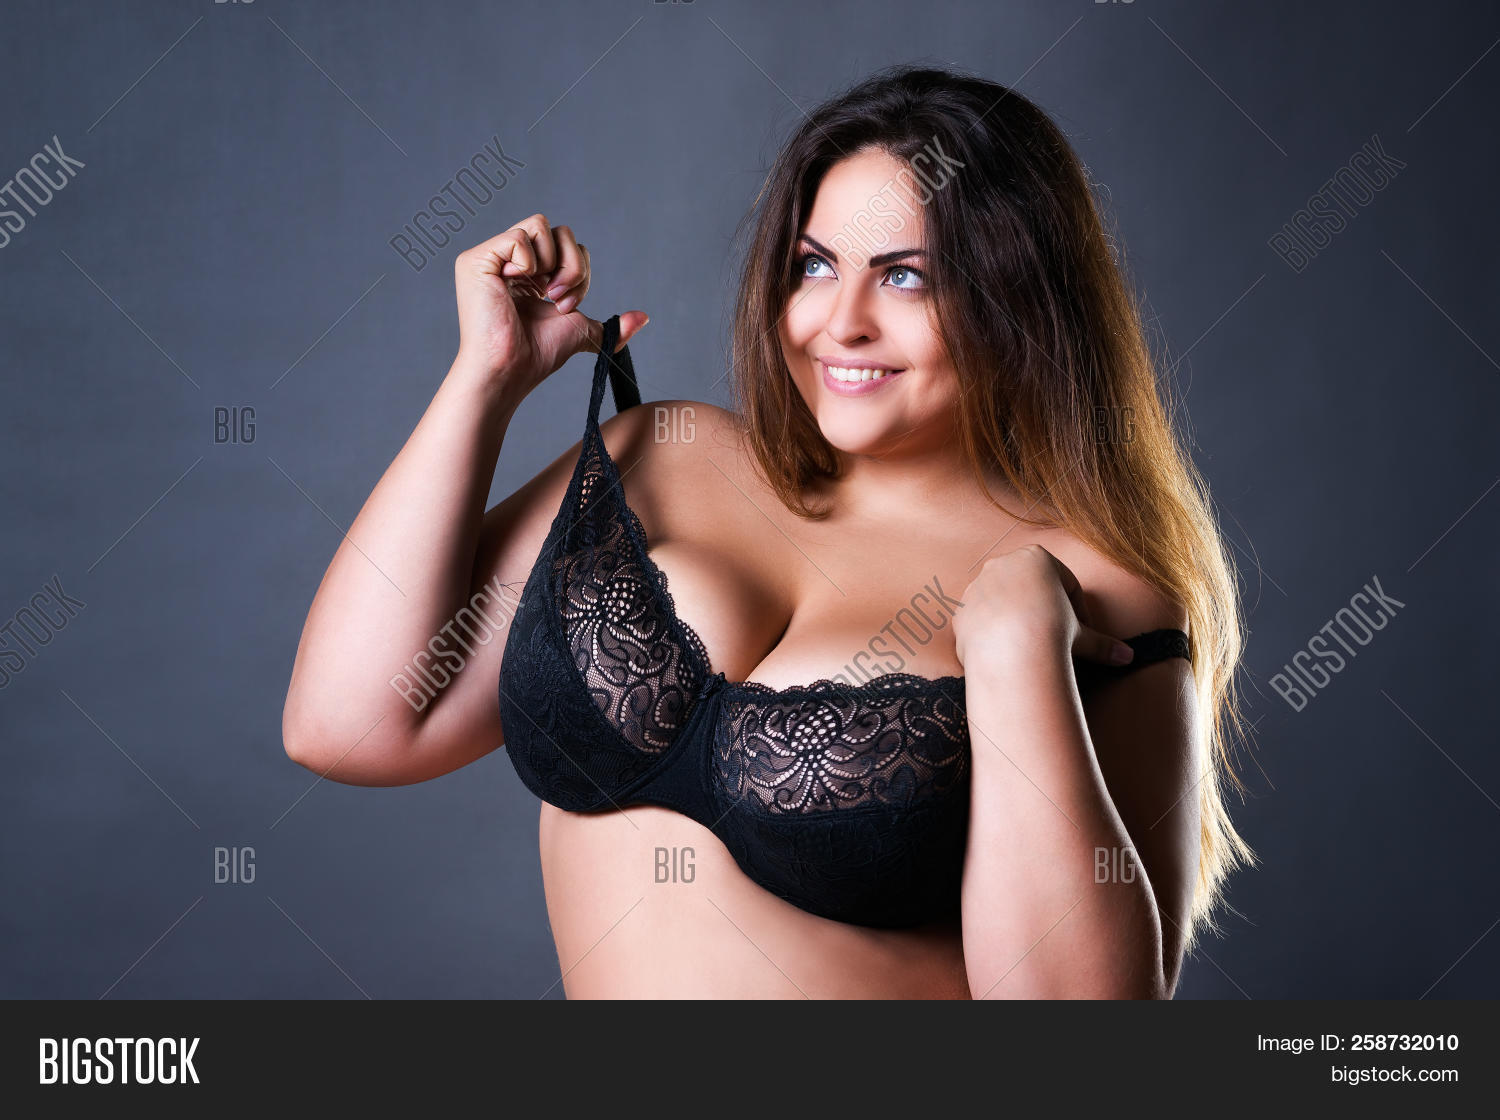 devon cardenas share free big natural breast photos